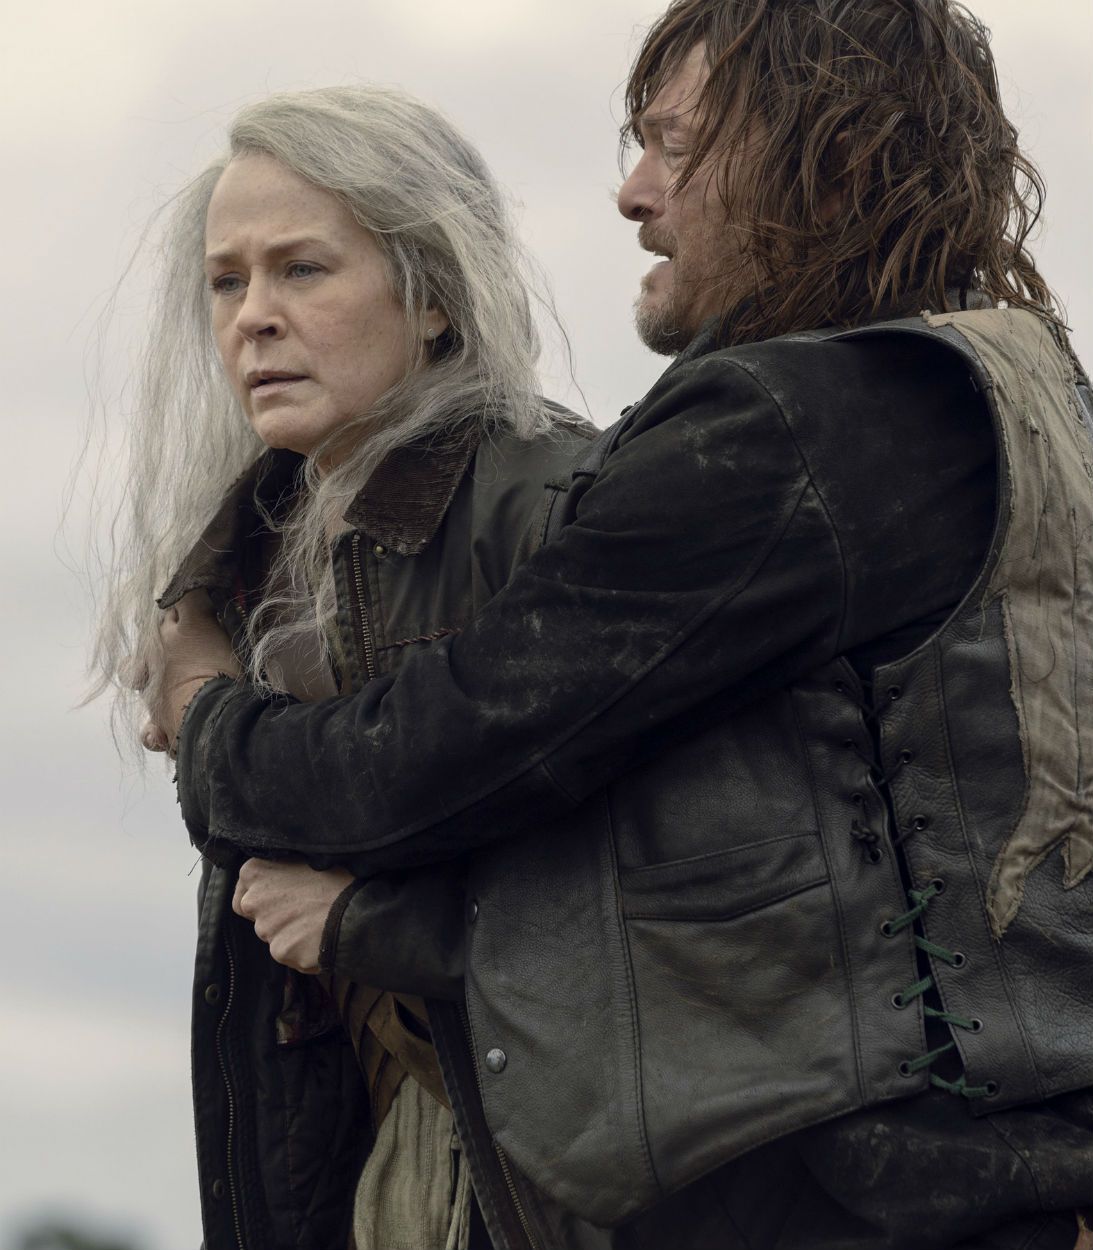 Carol and Daryl seeing dead Henry The Walking Dead season 9 VERTICAL